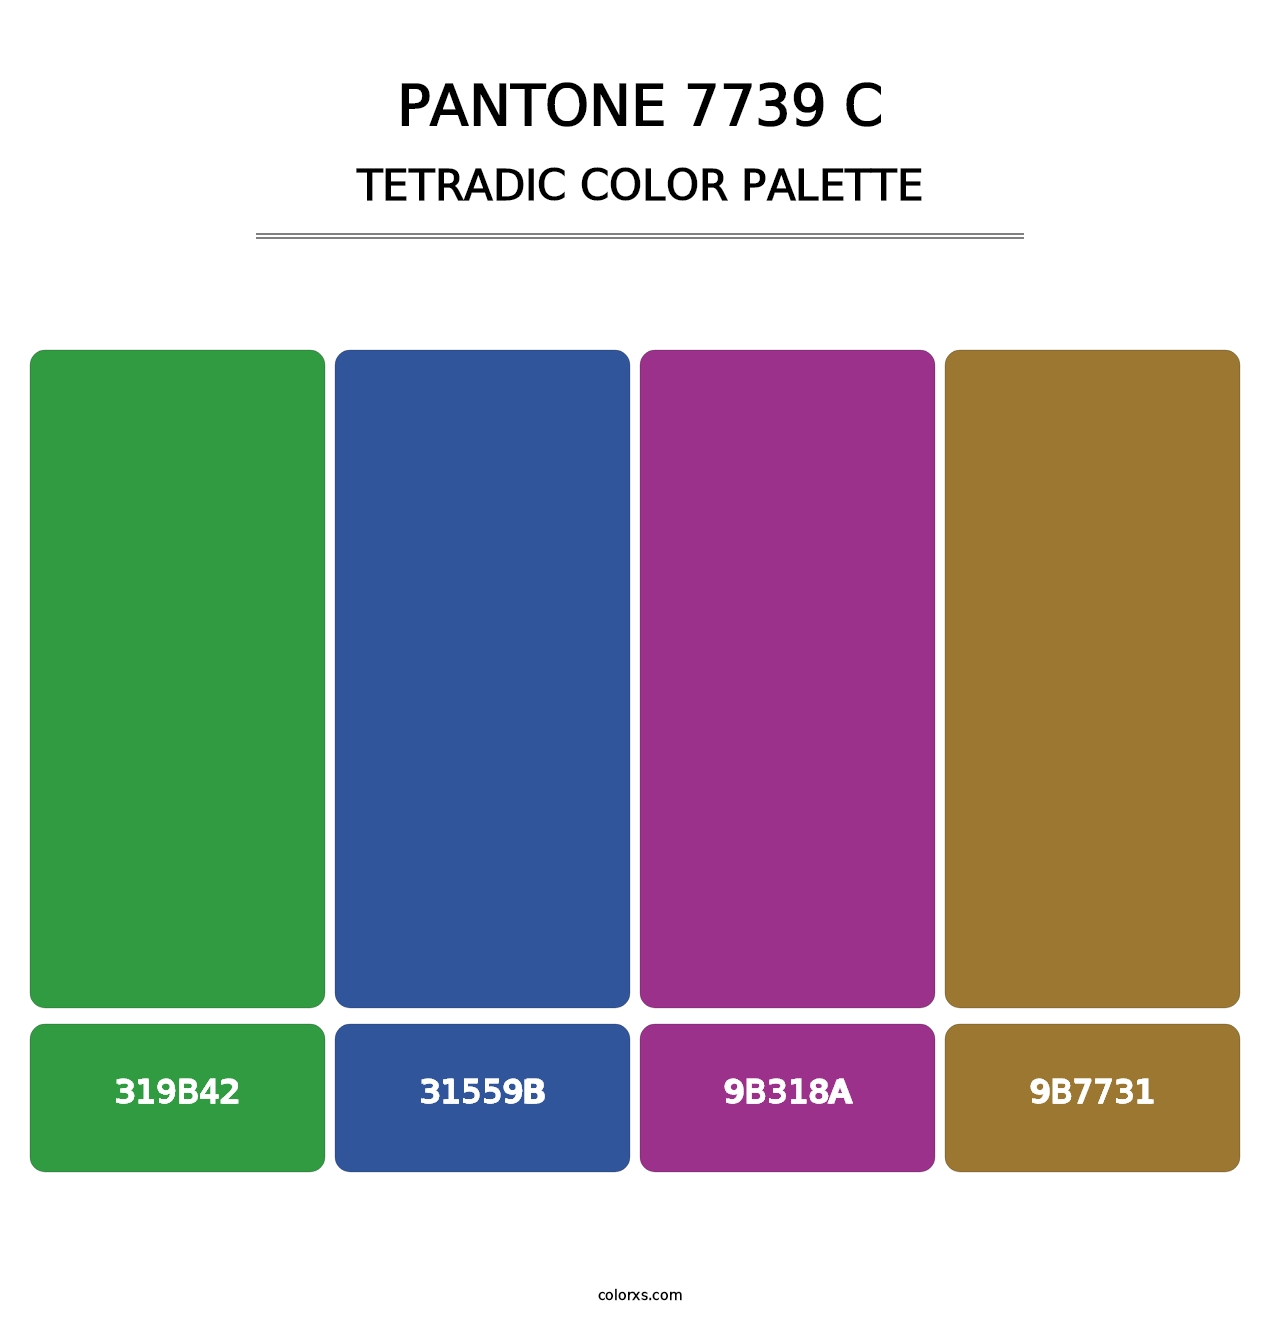 PANTONE 7739 C - Tetradic Color Palette